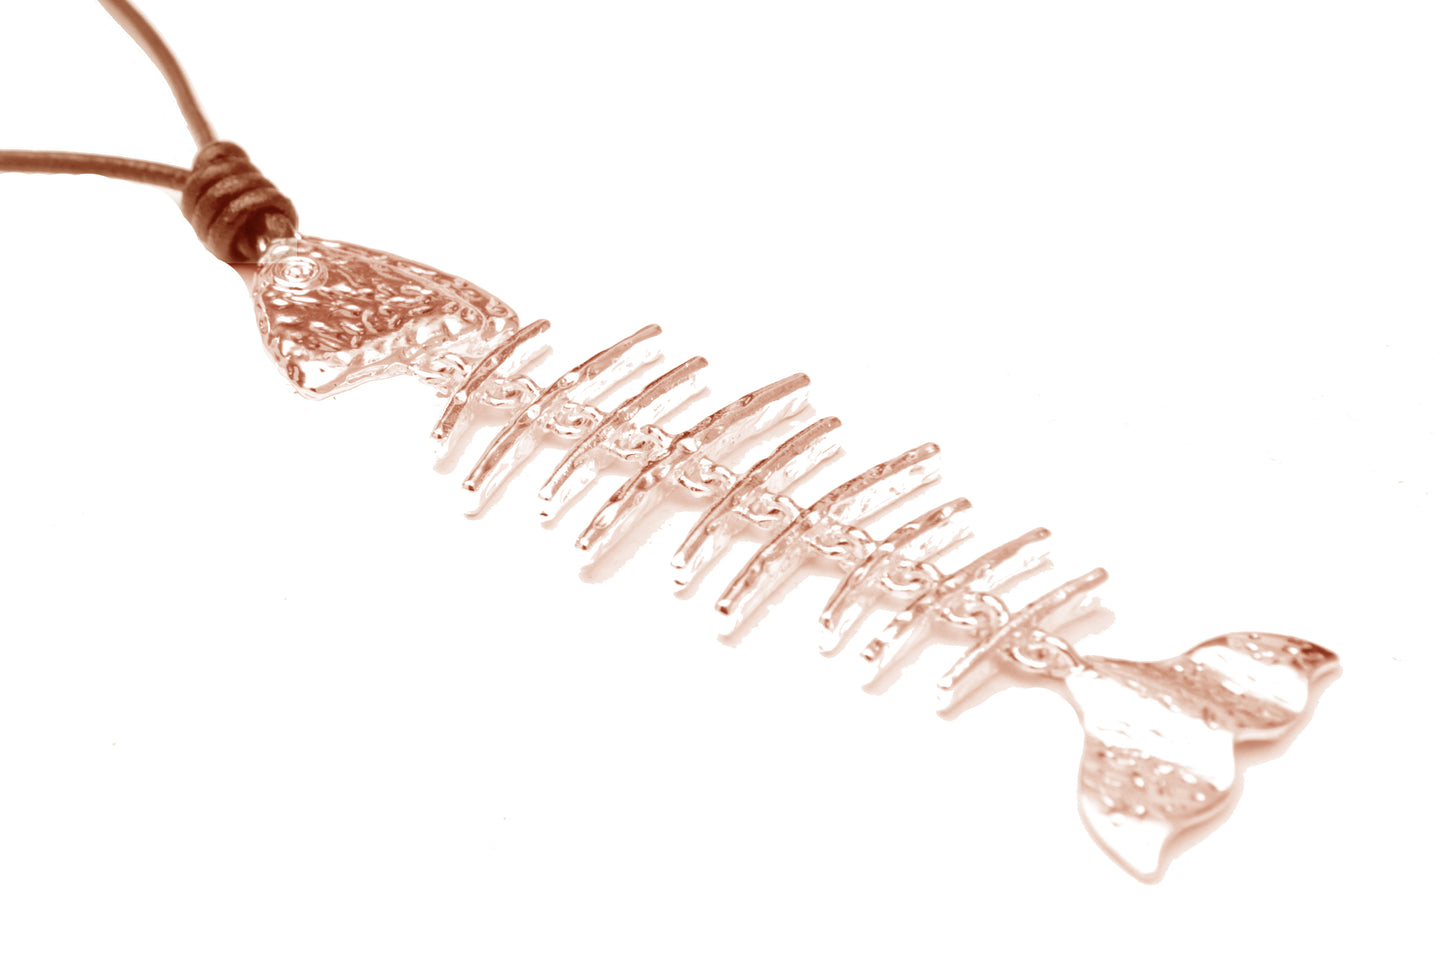 Fish Skeleton Necklace